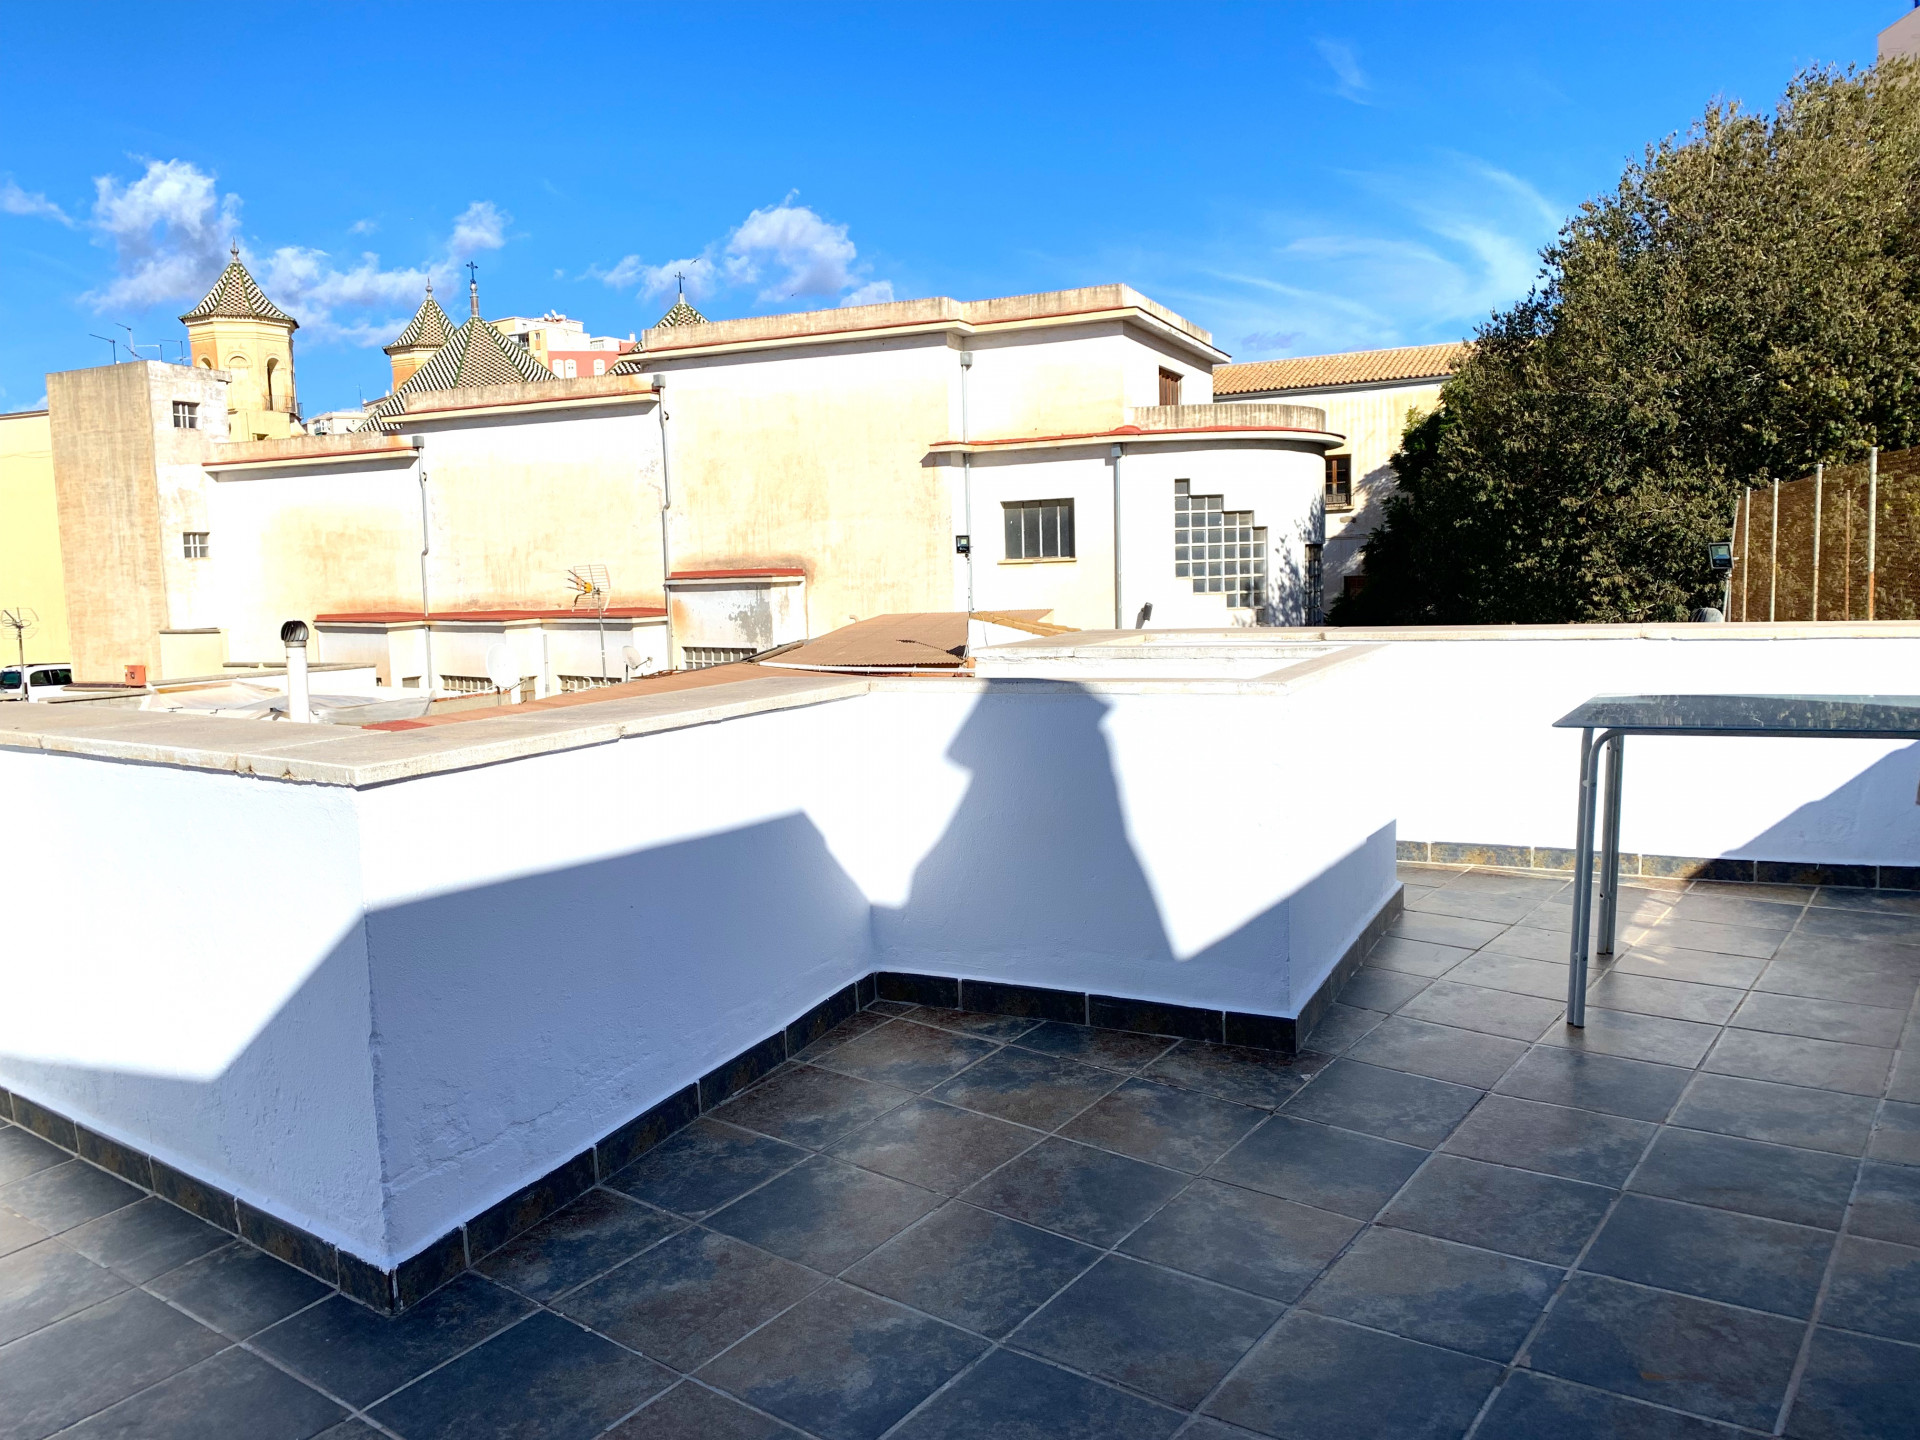 Penthouse with large solarium terrace with panoramic urban views of Málaga | Image 23